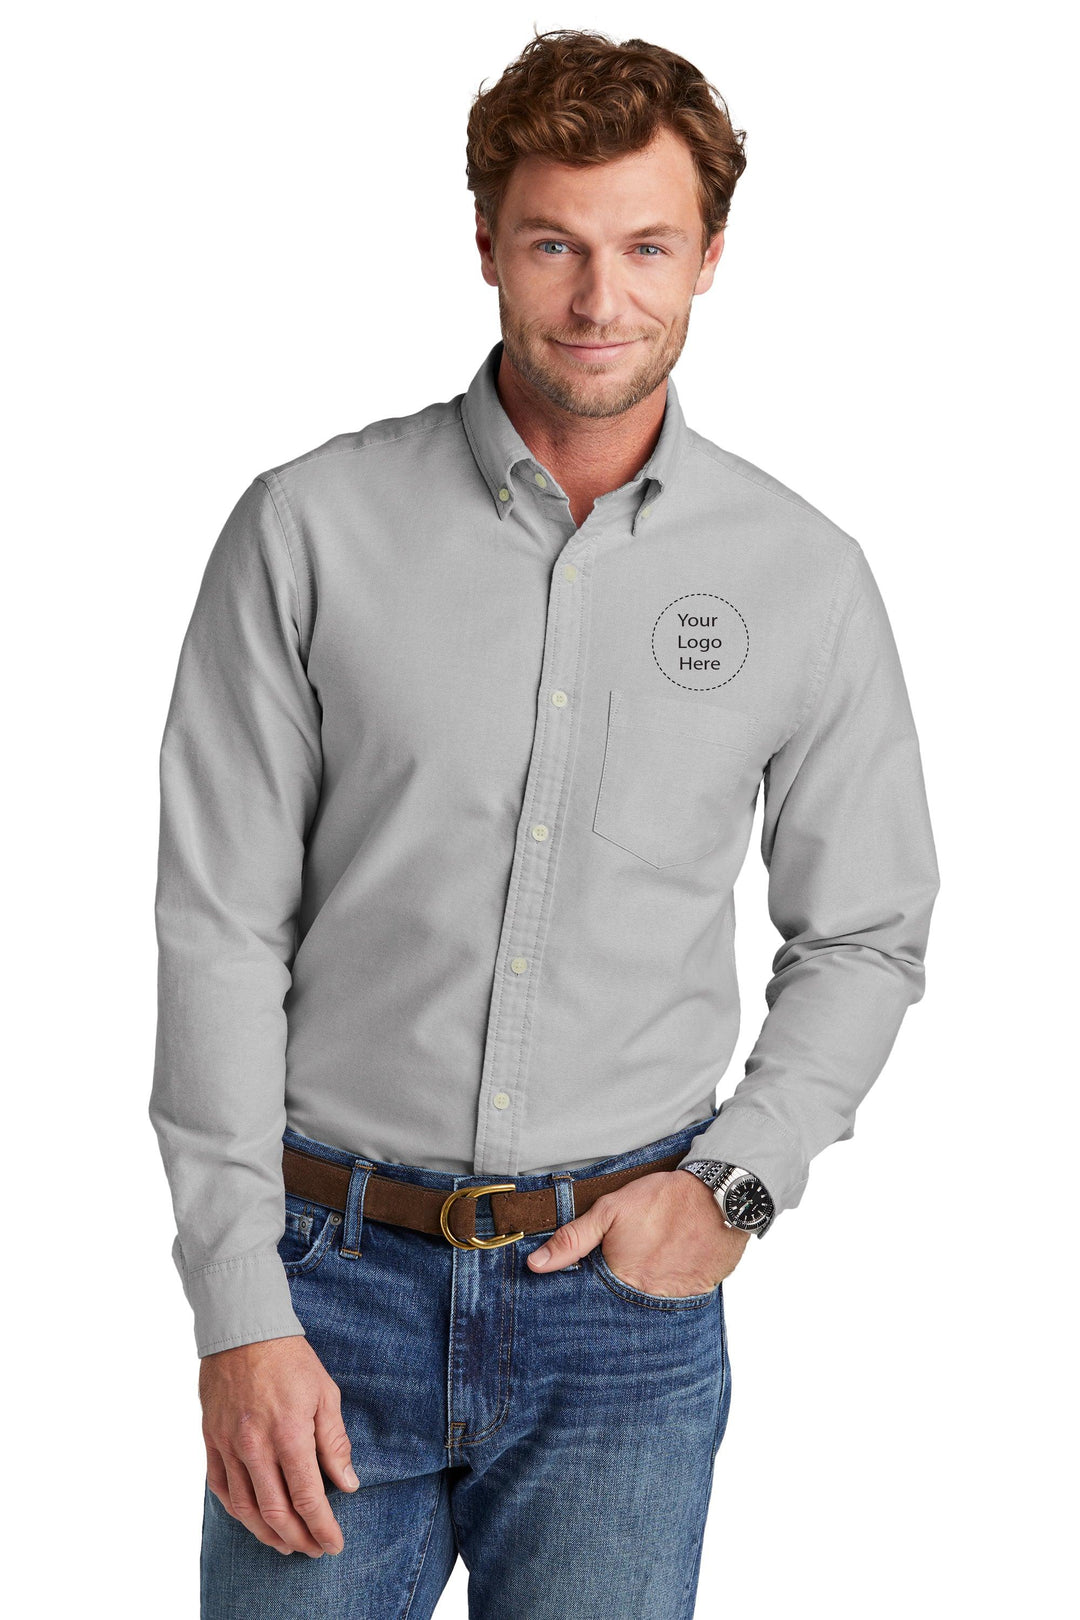 Keller Williams NEW KW-BB18004 Brooks Brothers® Casual Oxford Cloth Shirt 